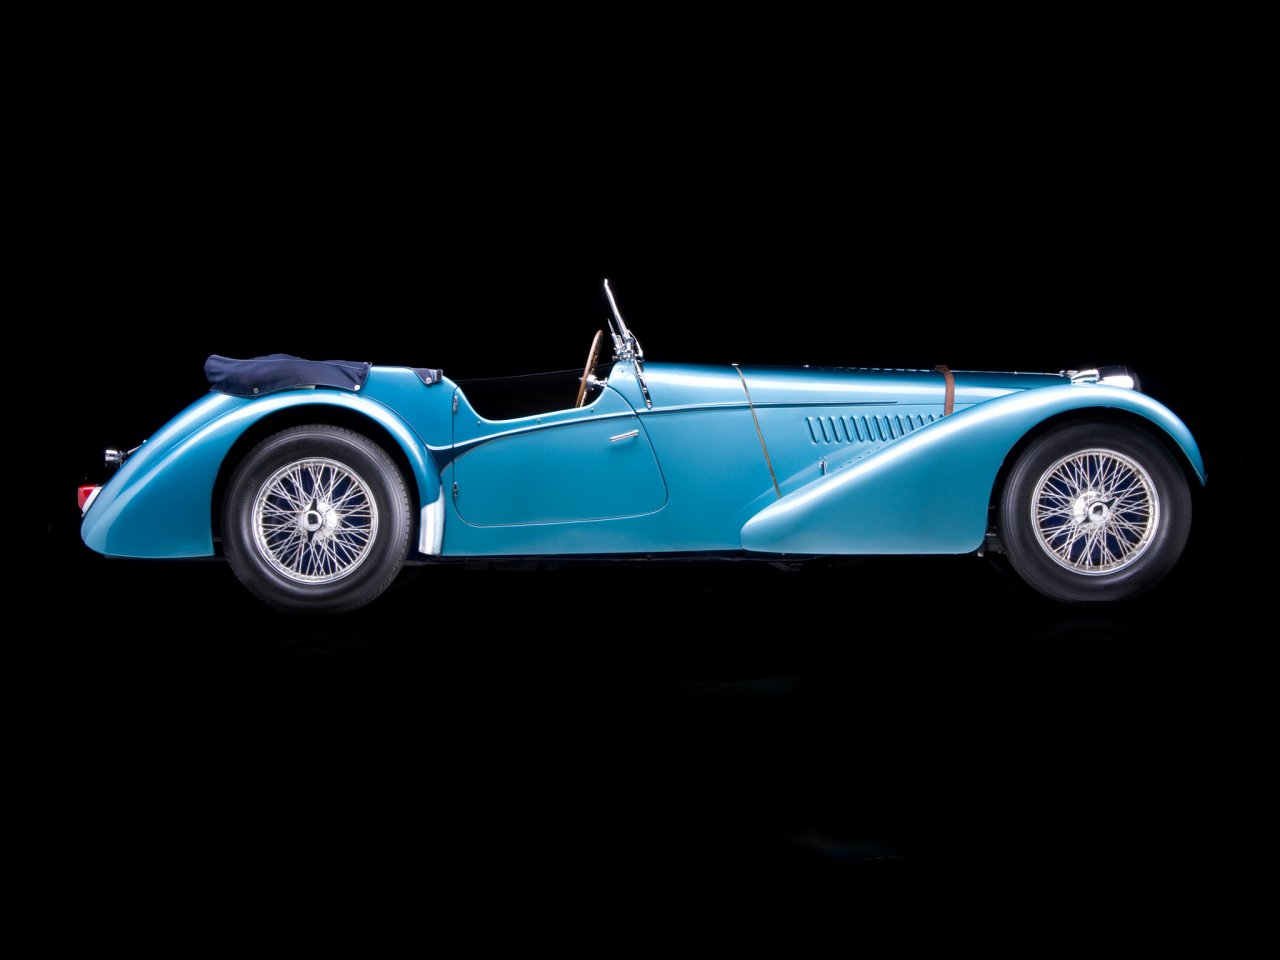 Bugatti Type 57 SC Vanden Plas Roadster specs, performance data